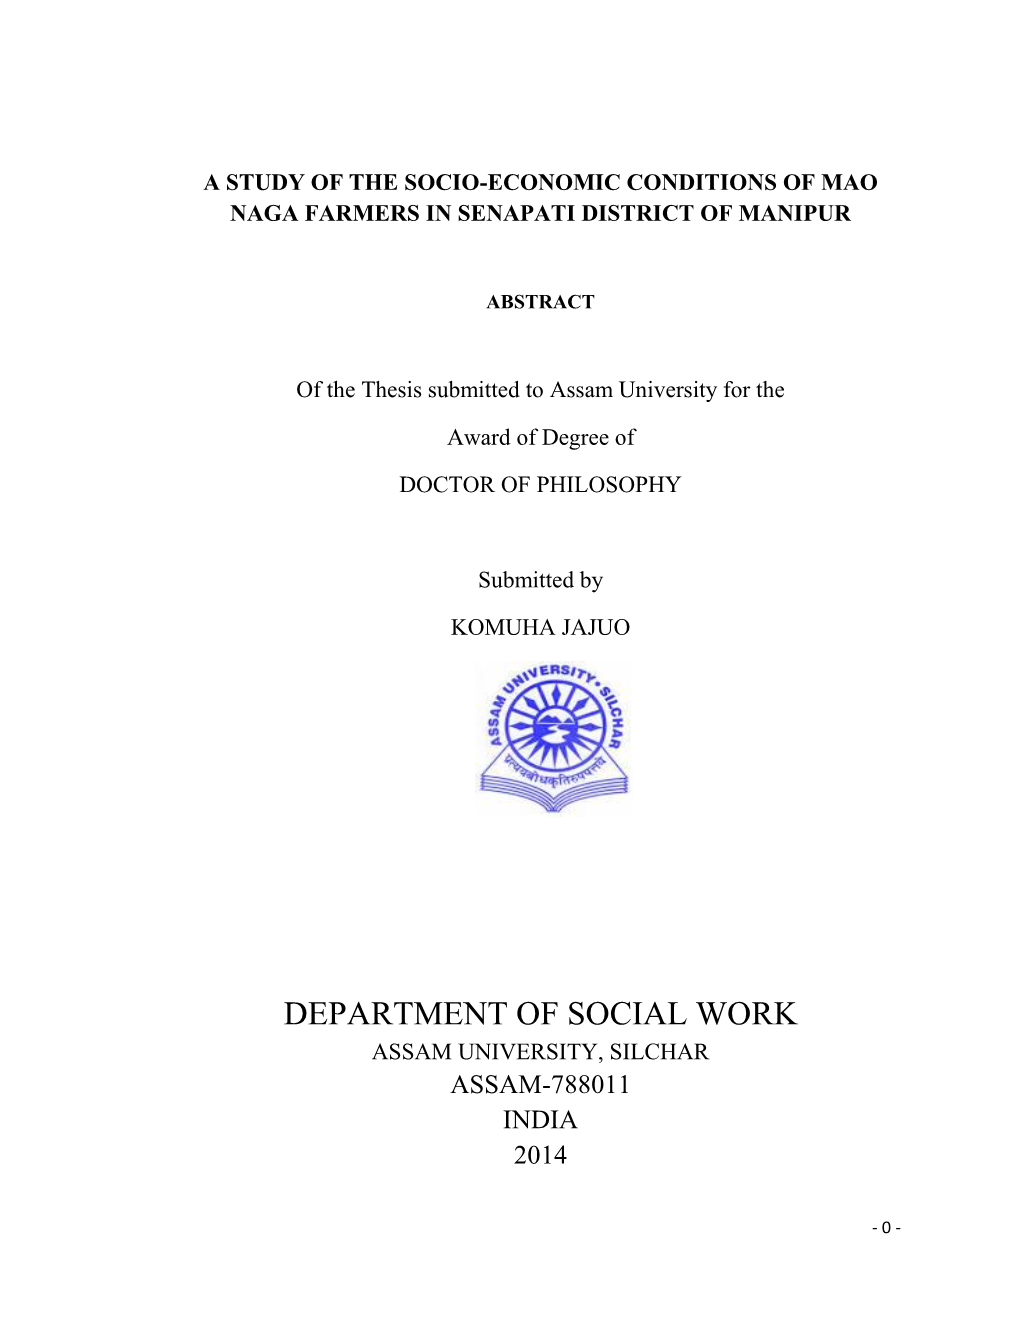 Department of Social Work Assam University, Silchar Assam-788011 India 2014